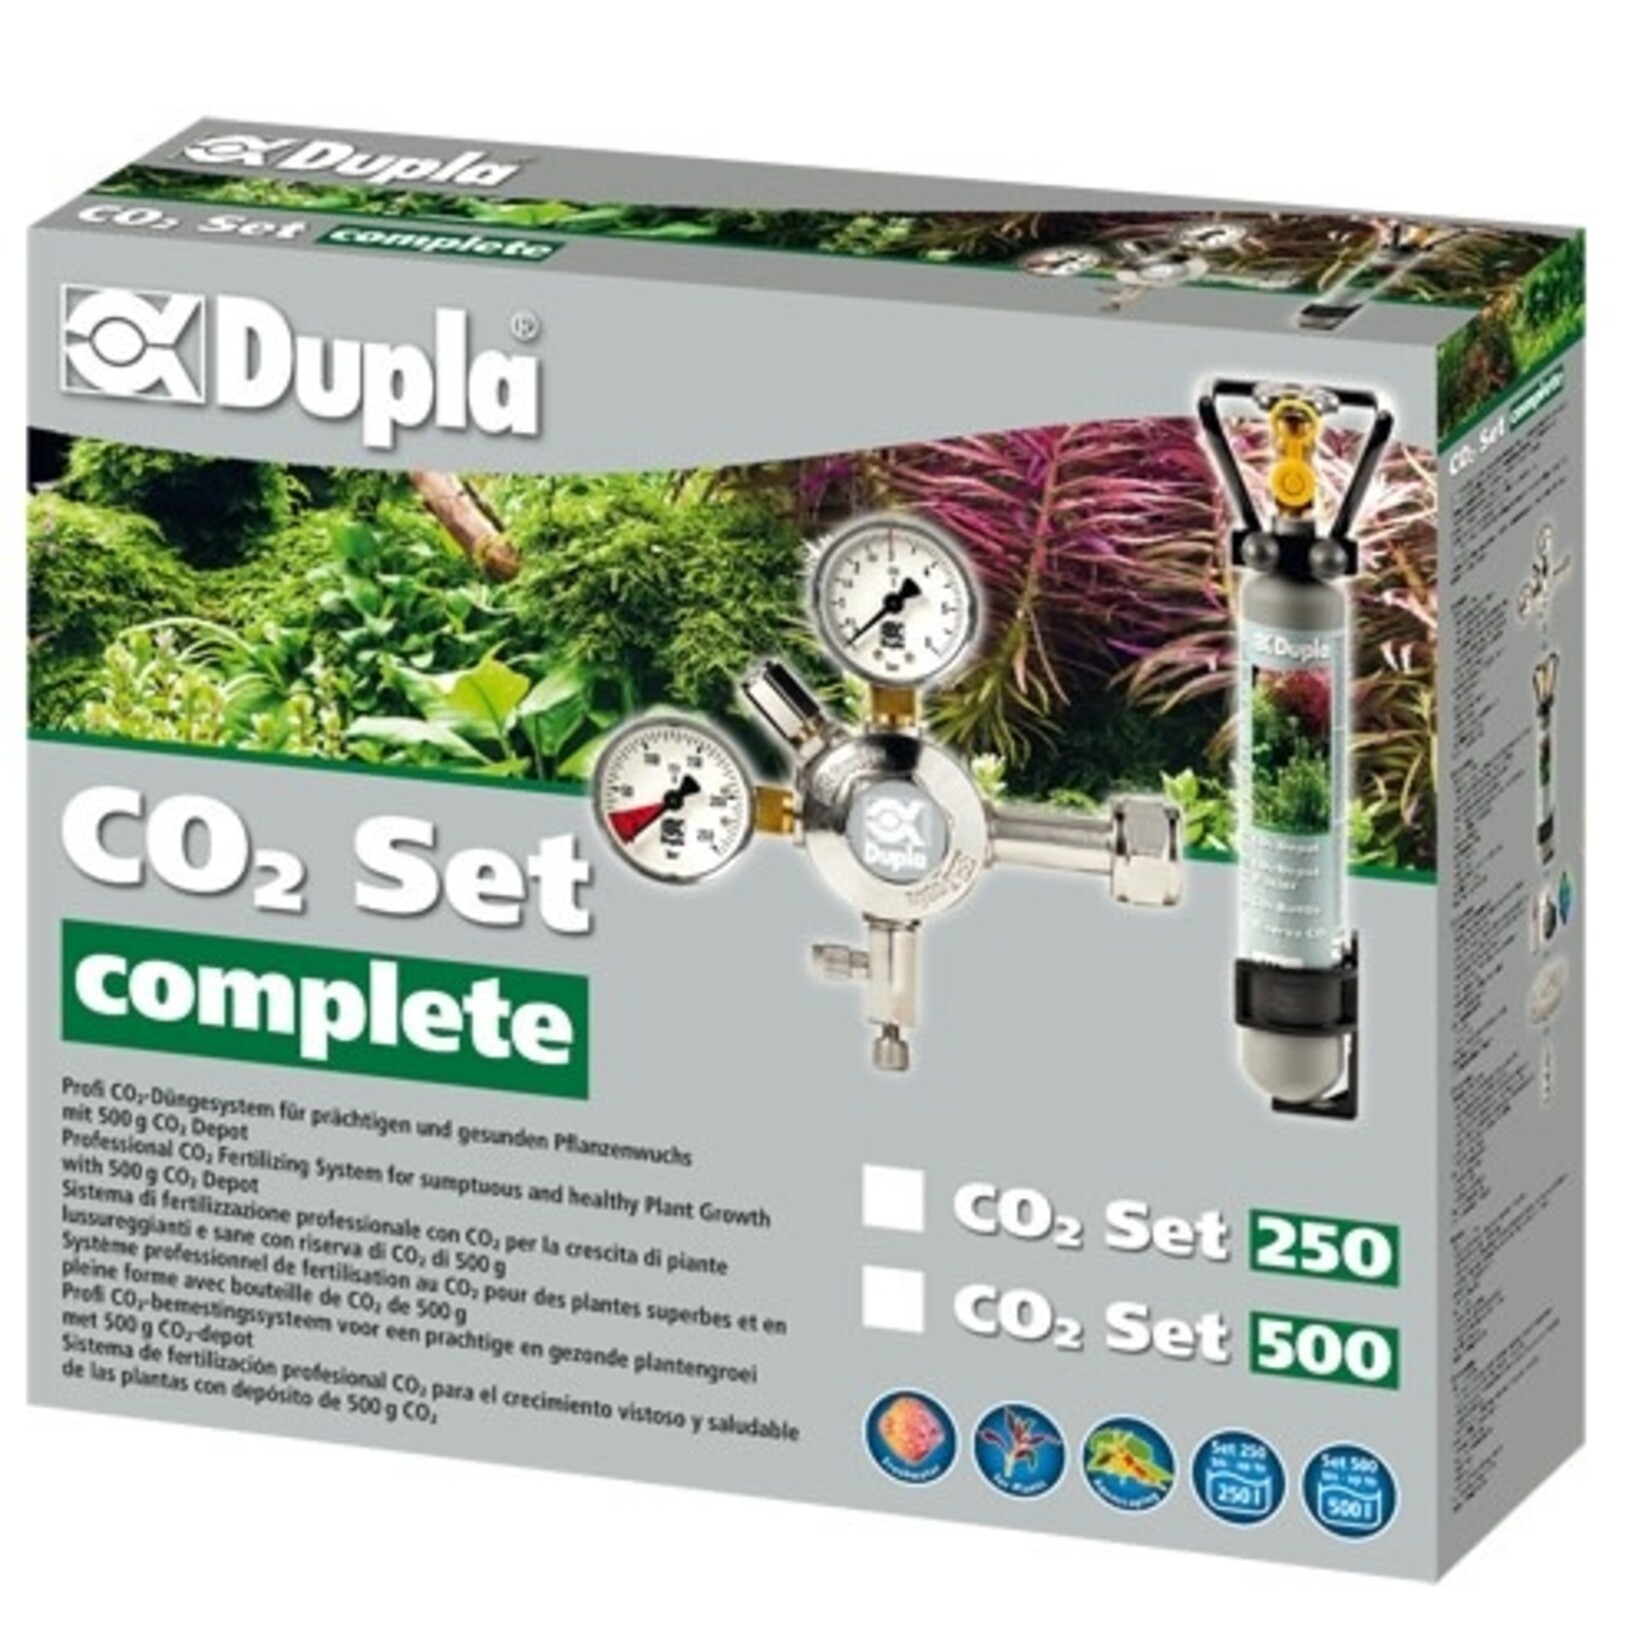 Dupla Co2 set complete 500